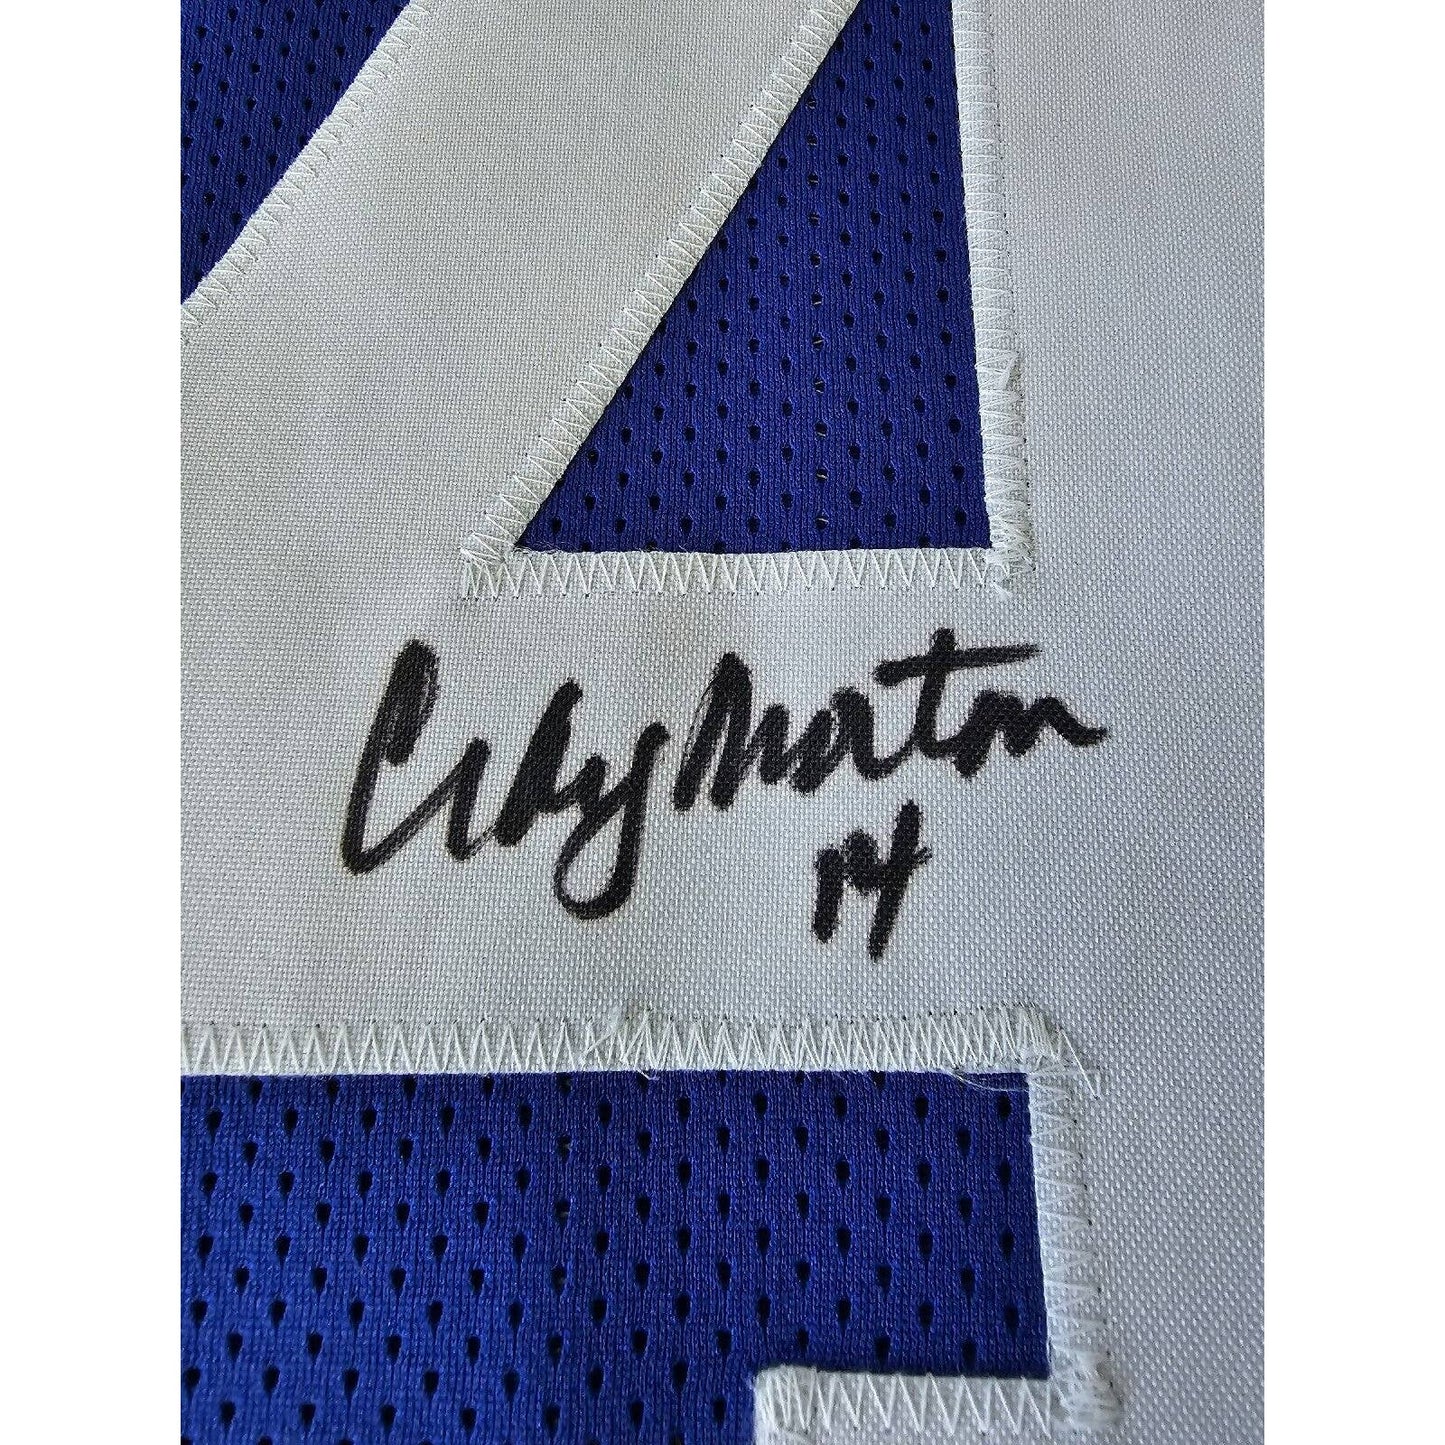 Craig Morton Autographed/Signed Jersey PSA/DNA COA Dallas Cowboys